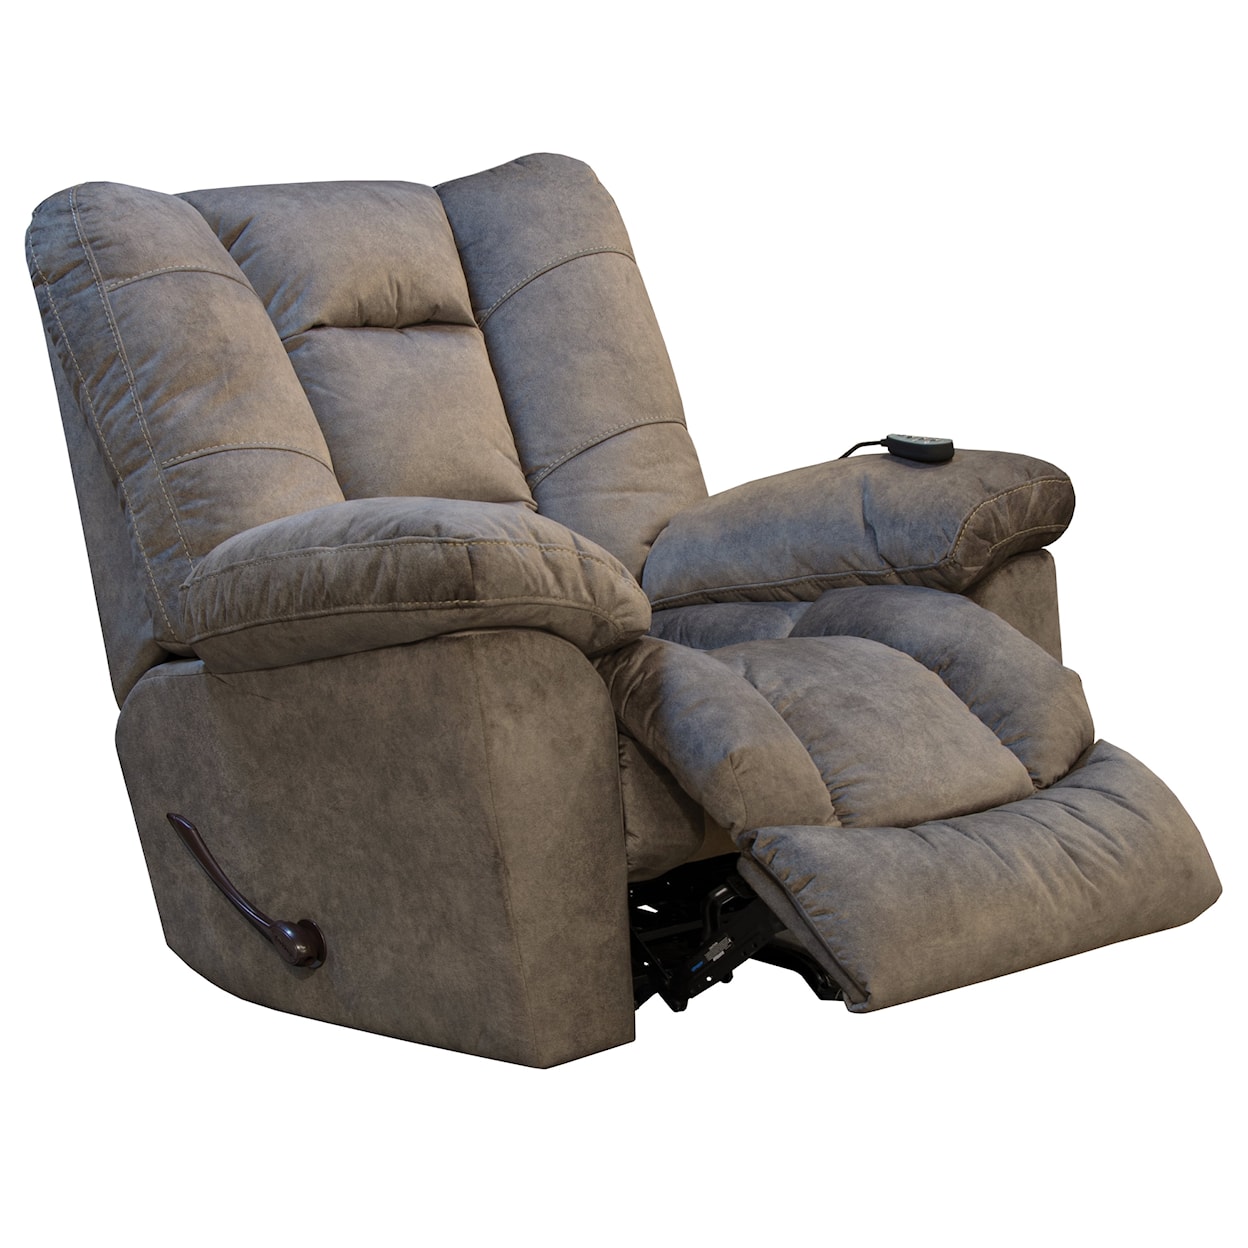 Carolina Furniture Manfred Rocker Recliner w/Heat & Massage